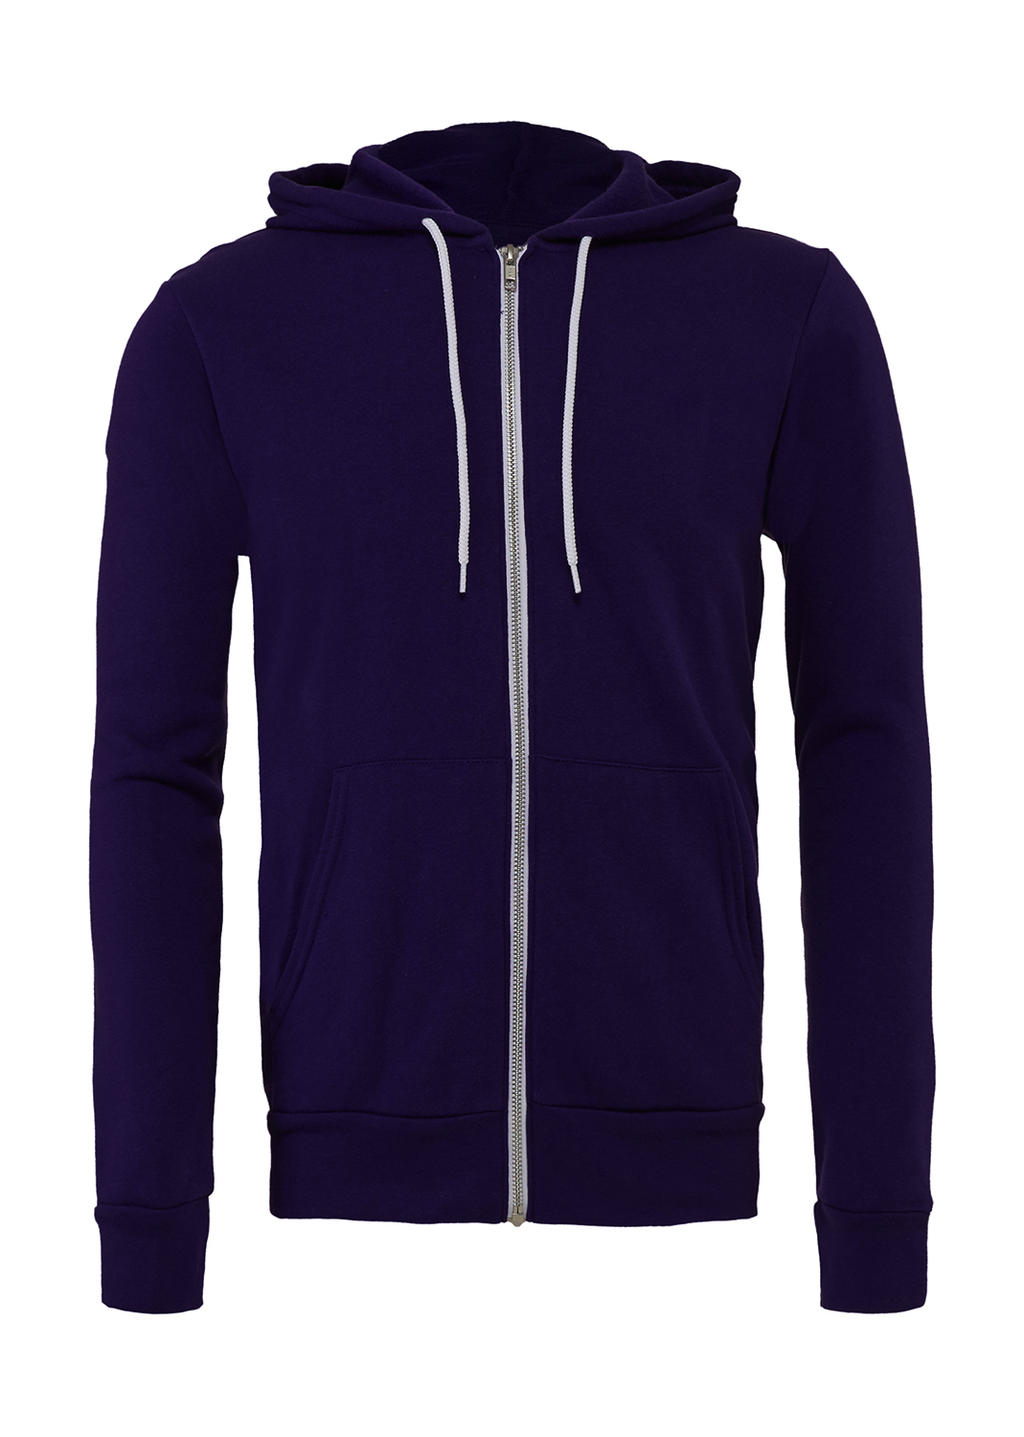  Unisex Poly-Cotton Full Zip Hoodie in Farbe Team Purple